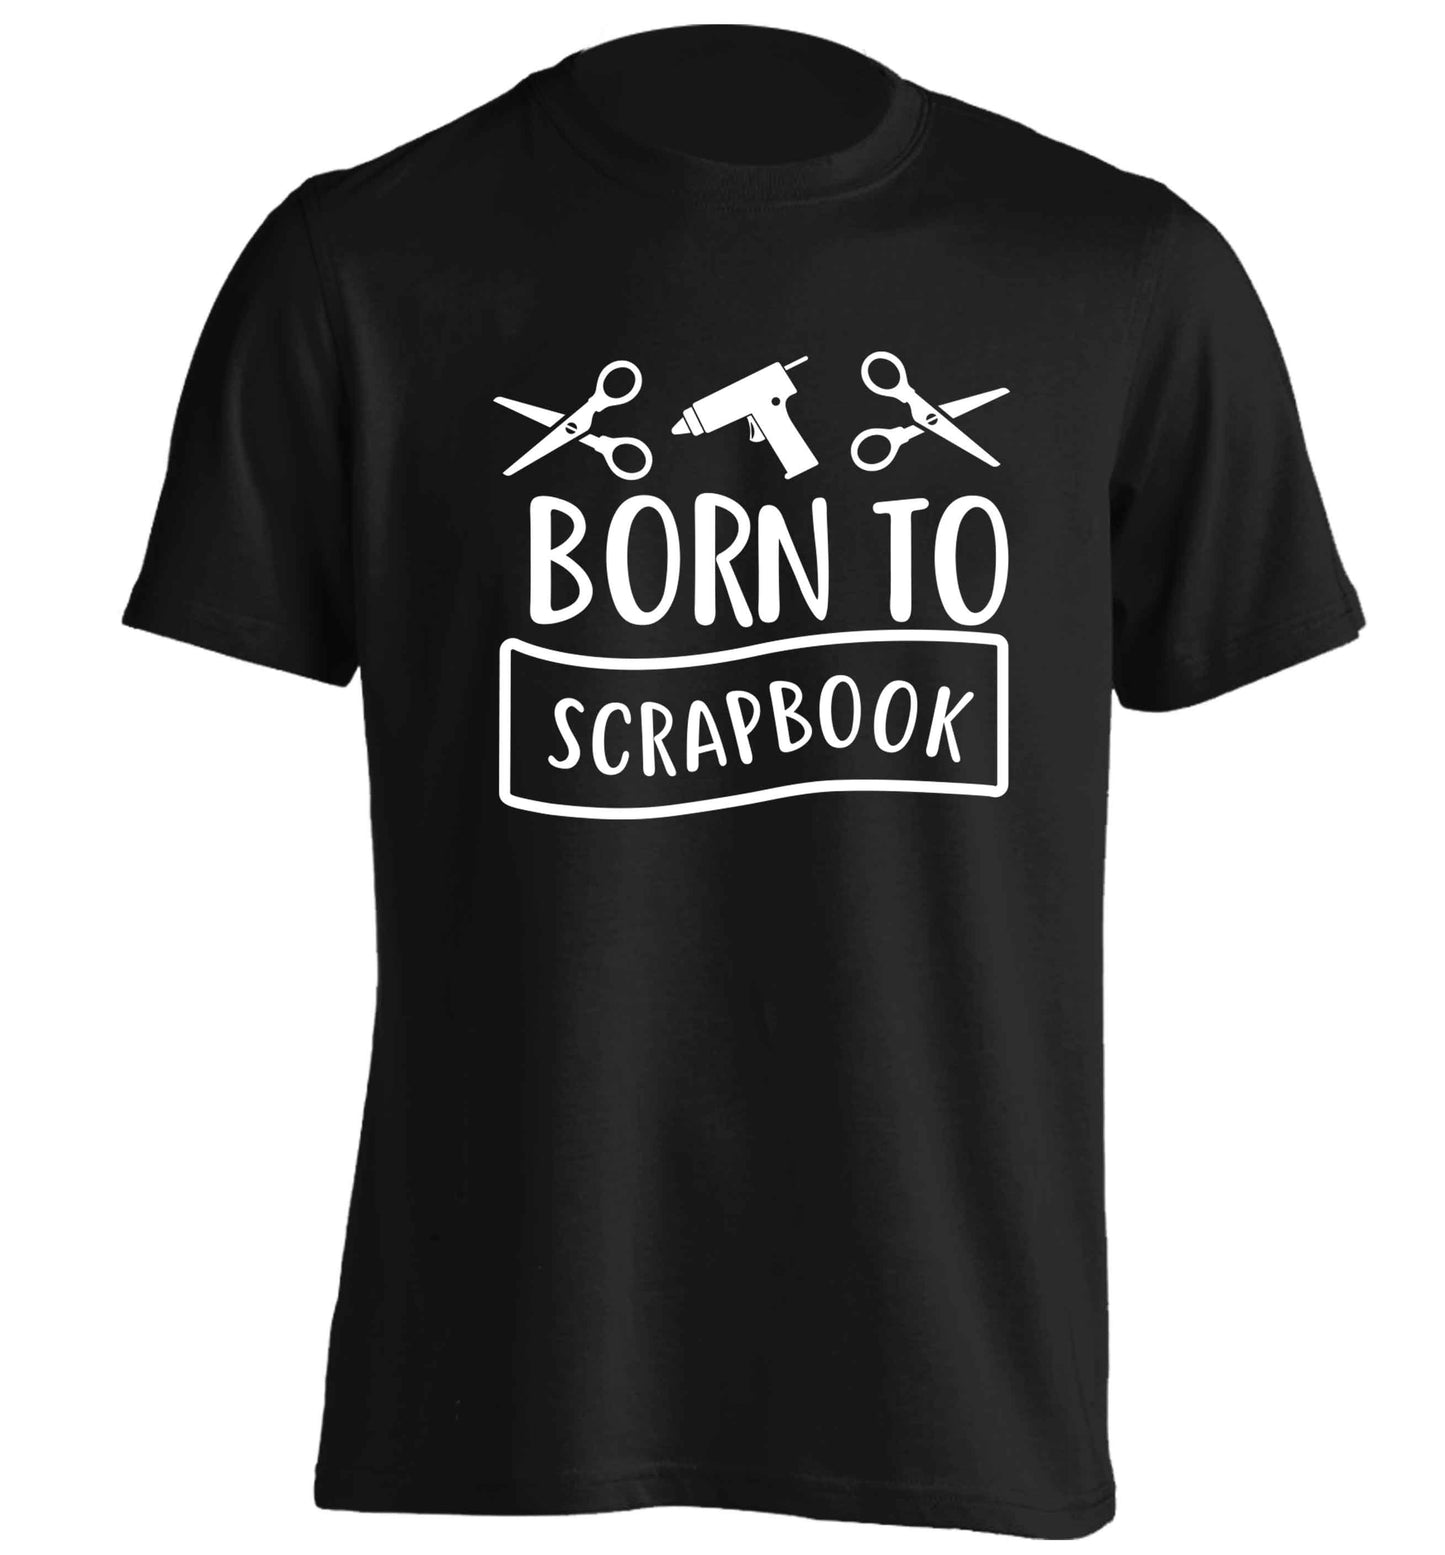 Born to scrapbook adults unisex black Tshirt 2XL